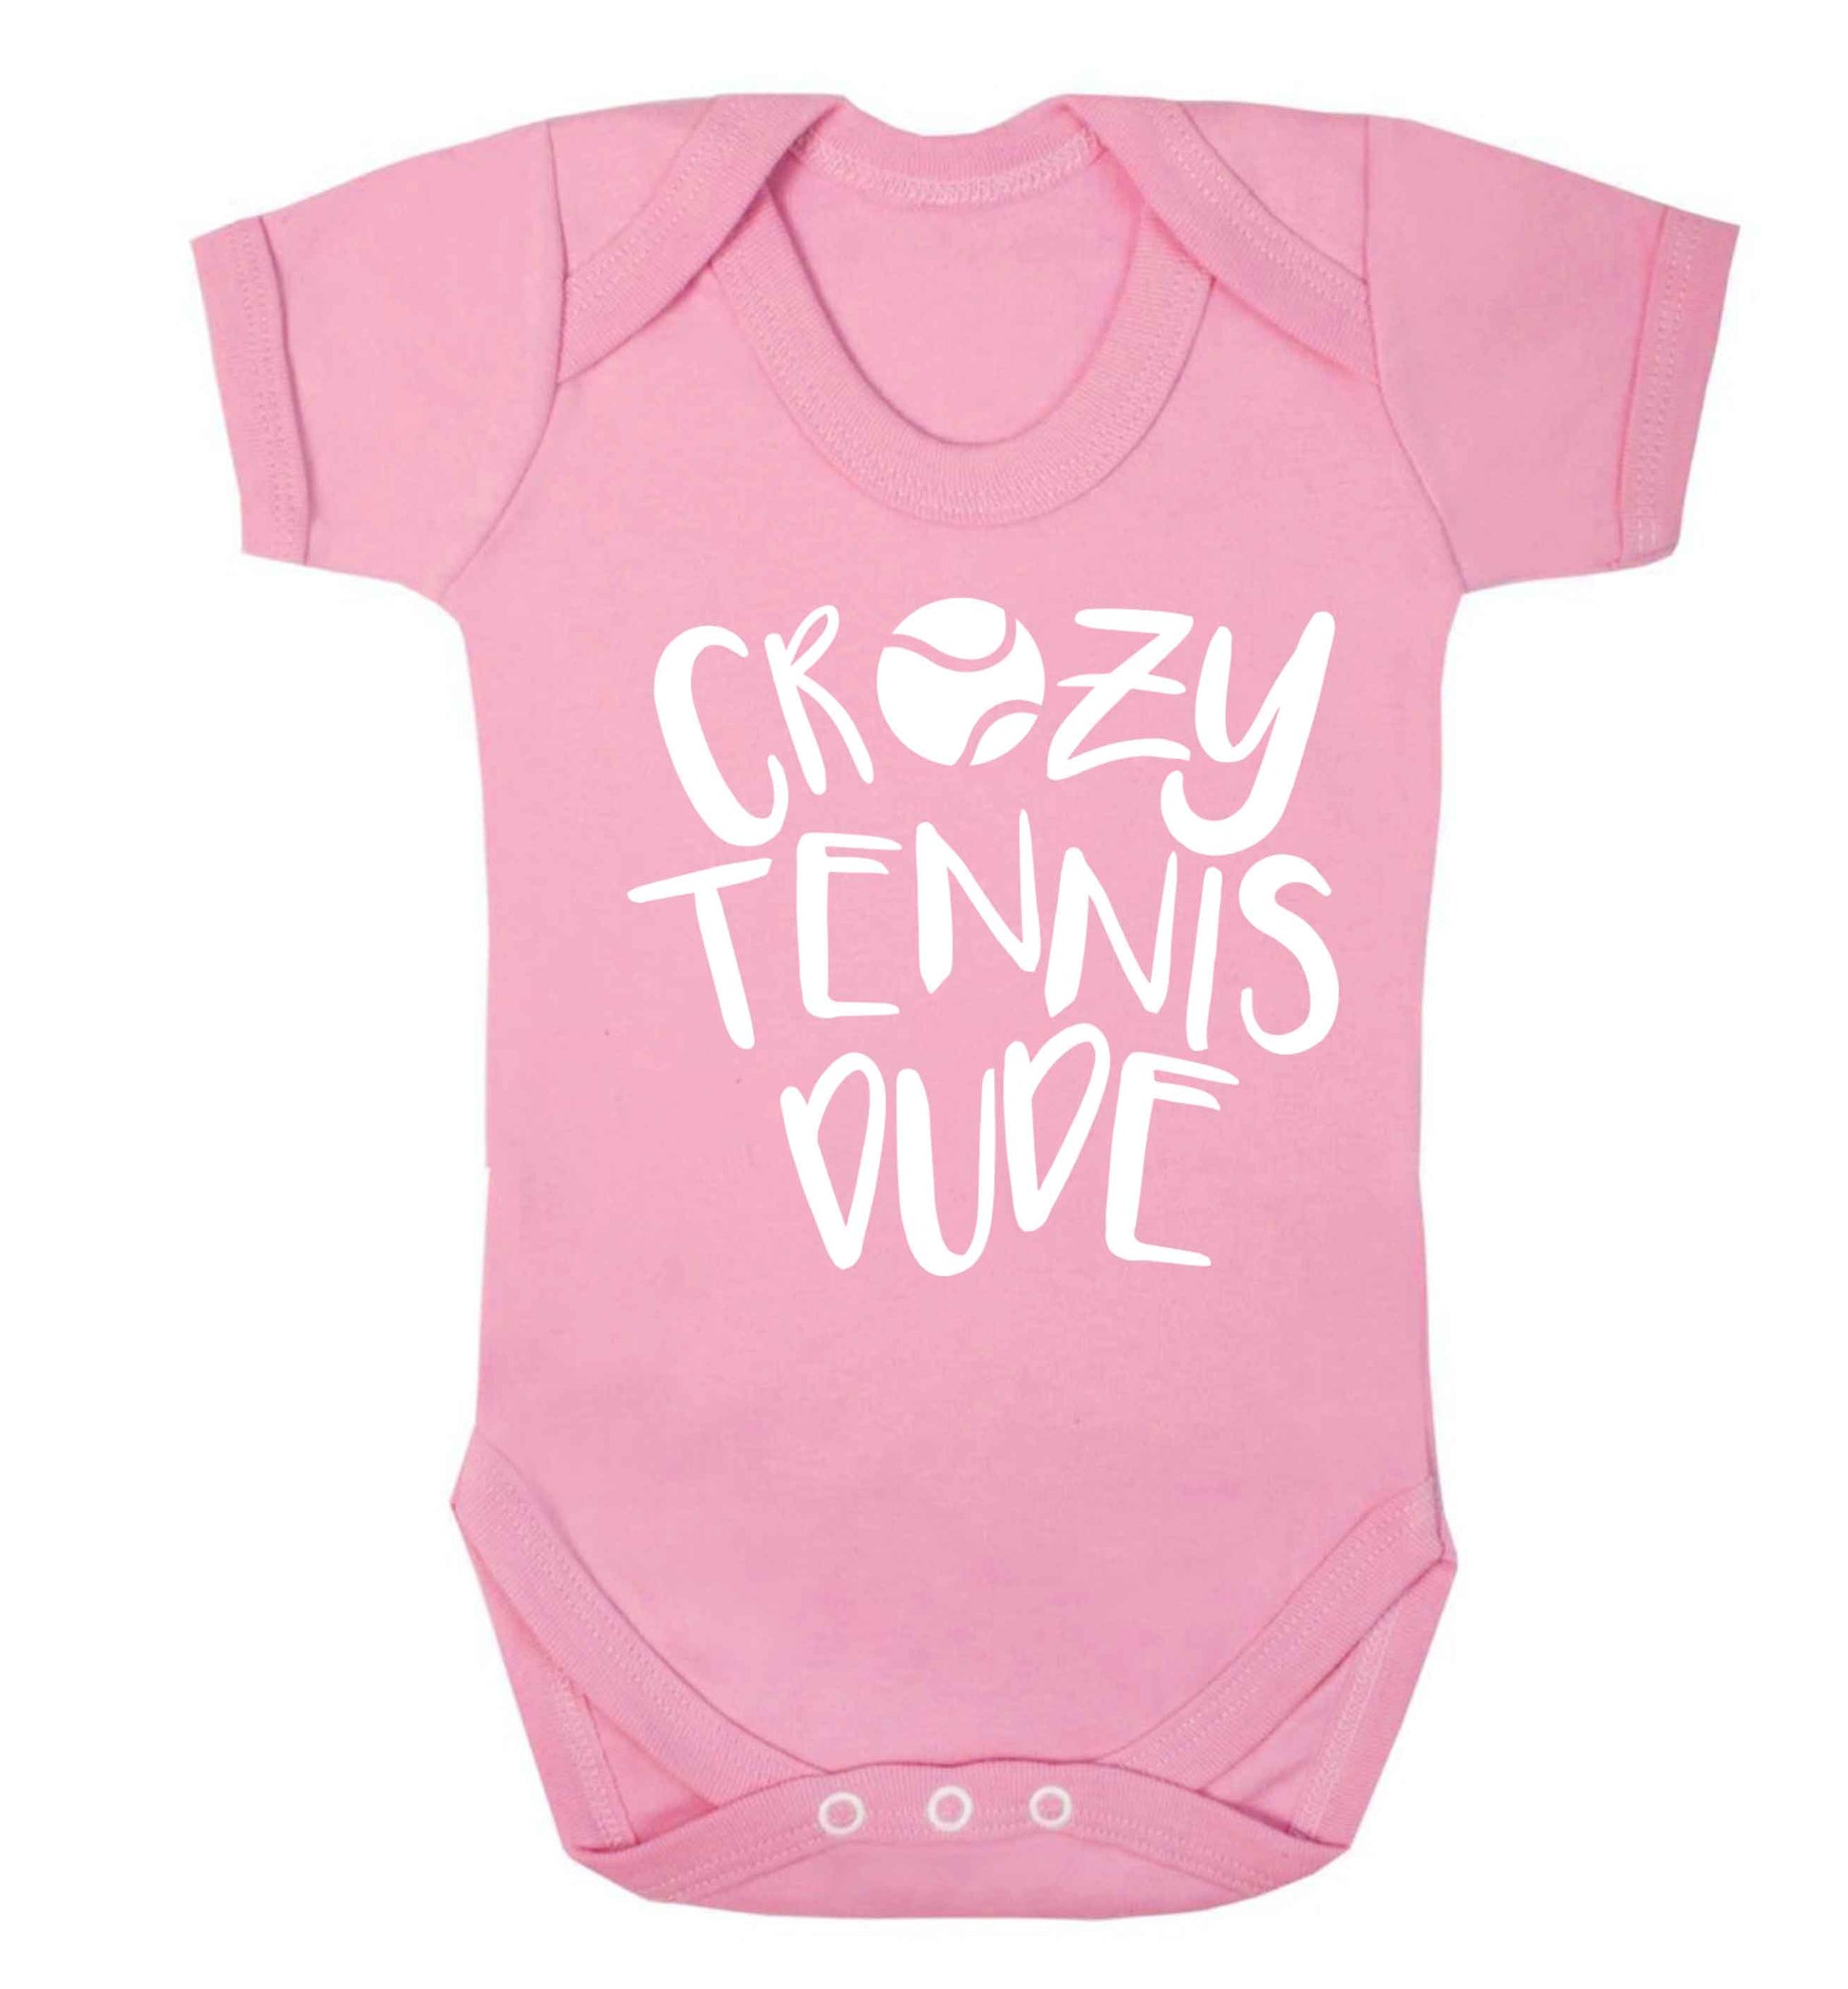 Crazy tennis dude Baby Vest pale pink 18-24 months